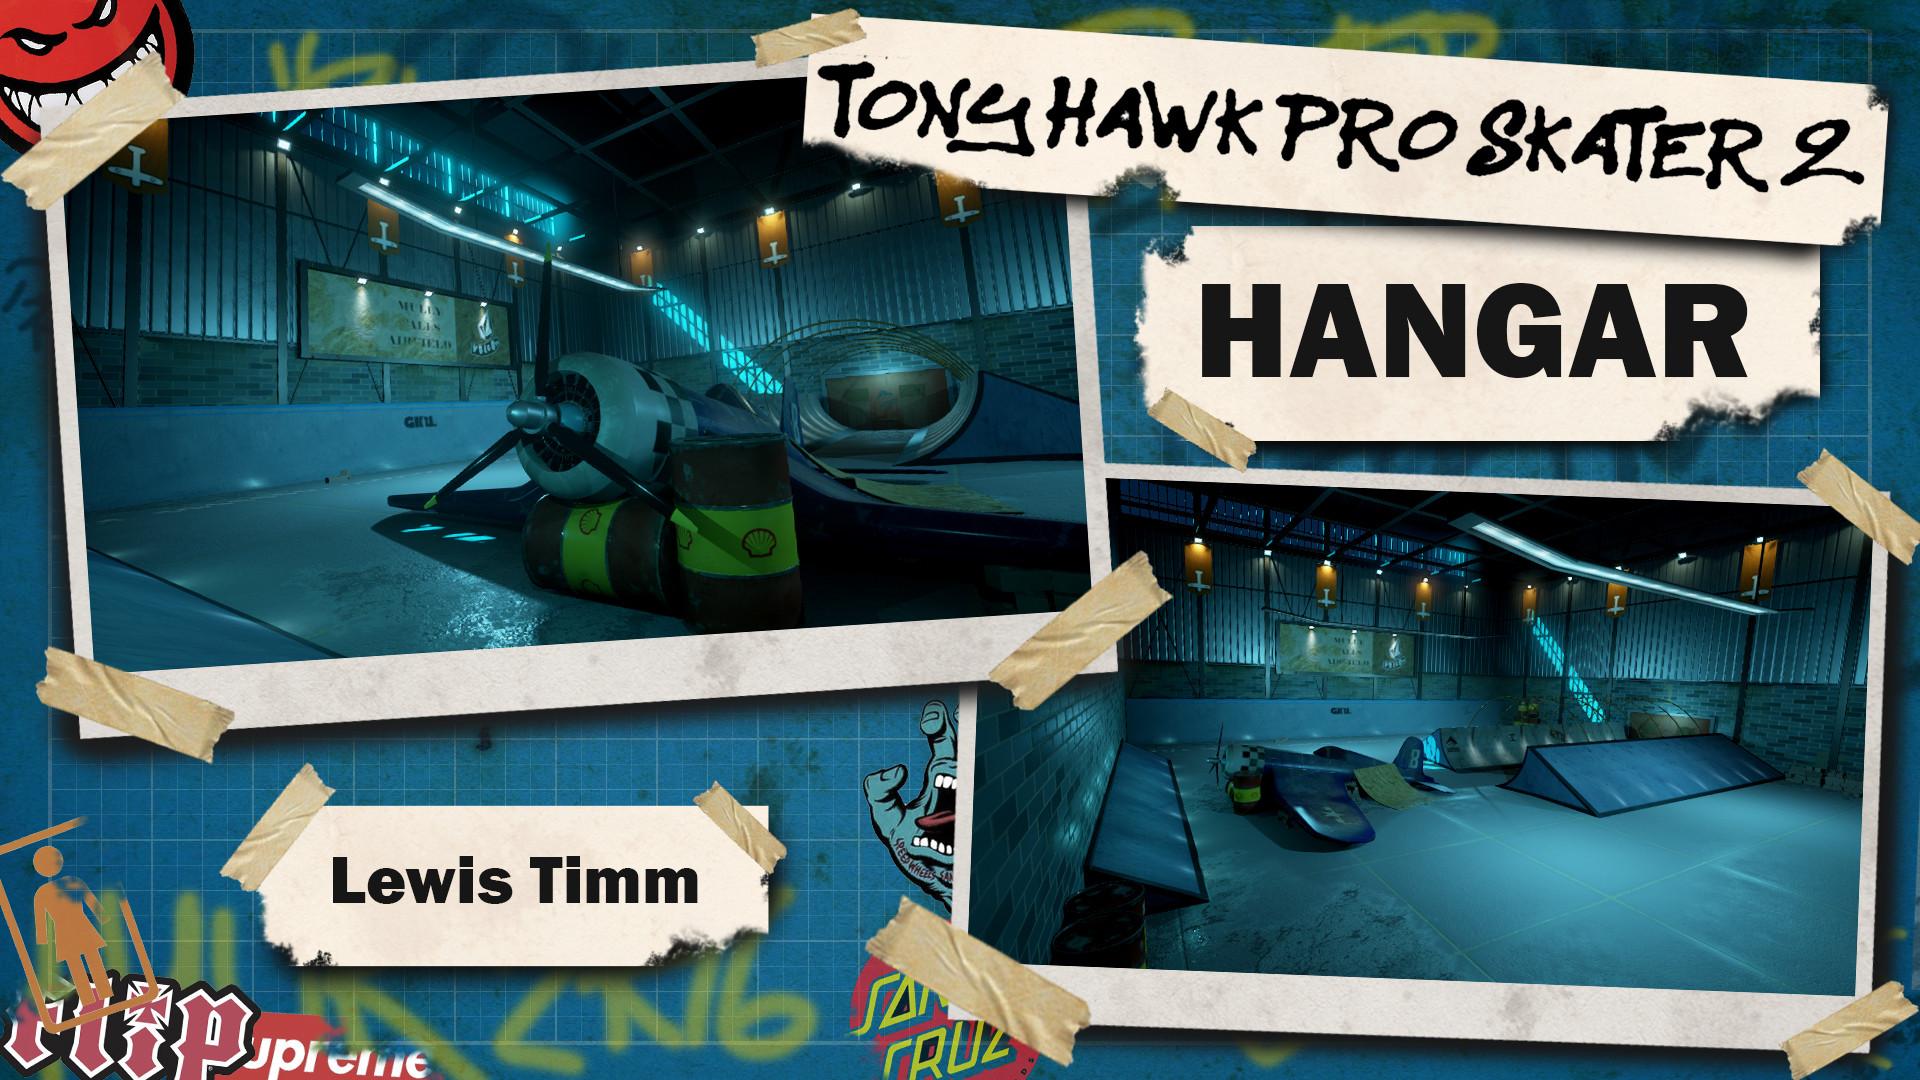 Unreal Engine 4 Hawk's Pro Skater 2 Hangar